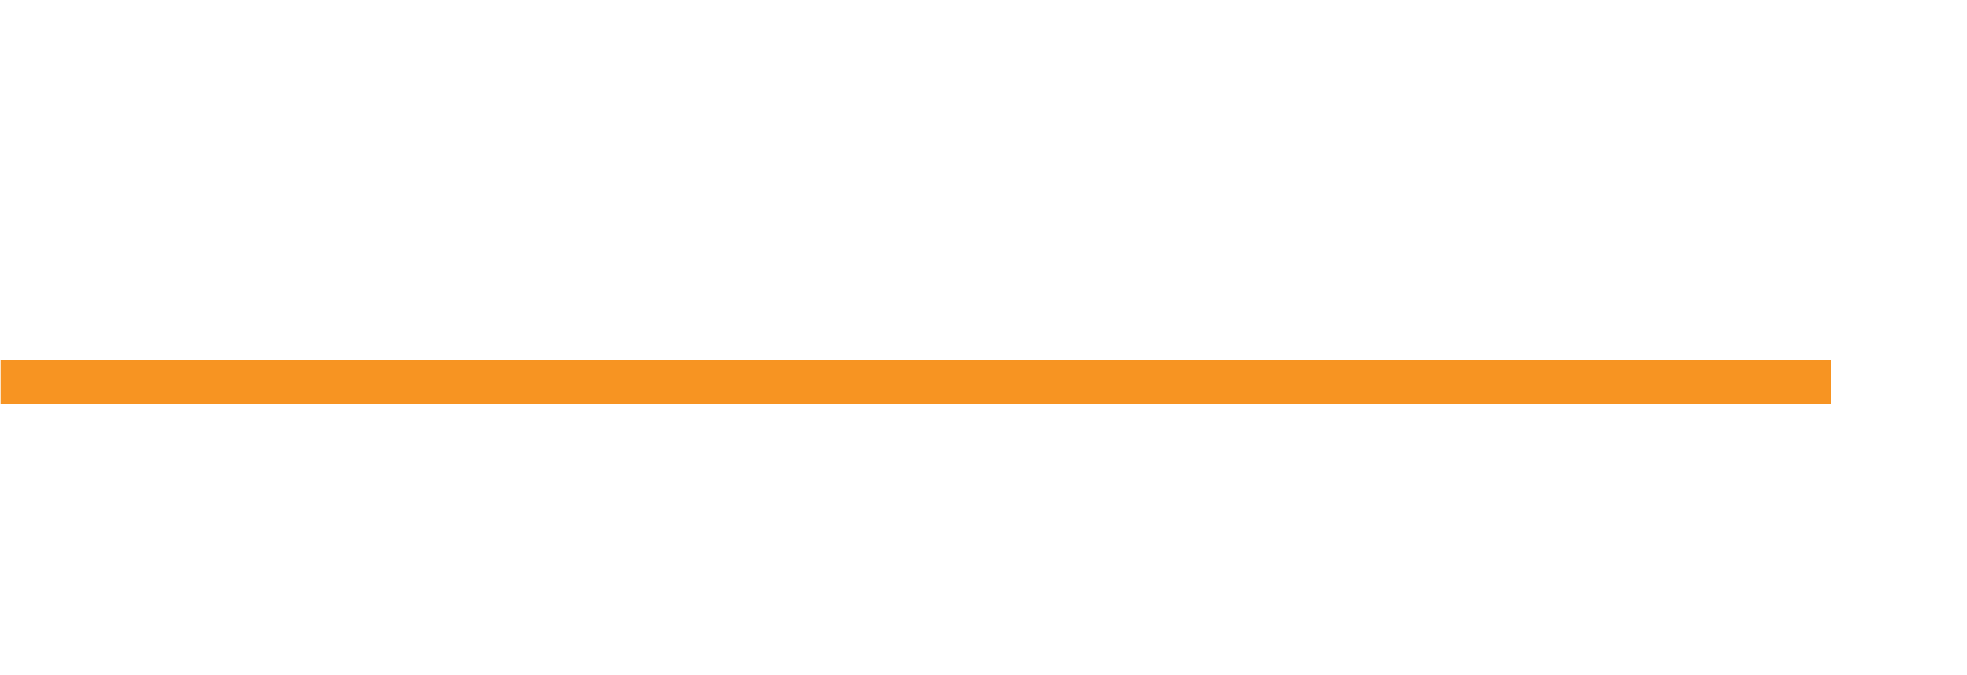 HW&Co. Average Tenure: 10 Years